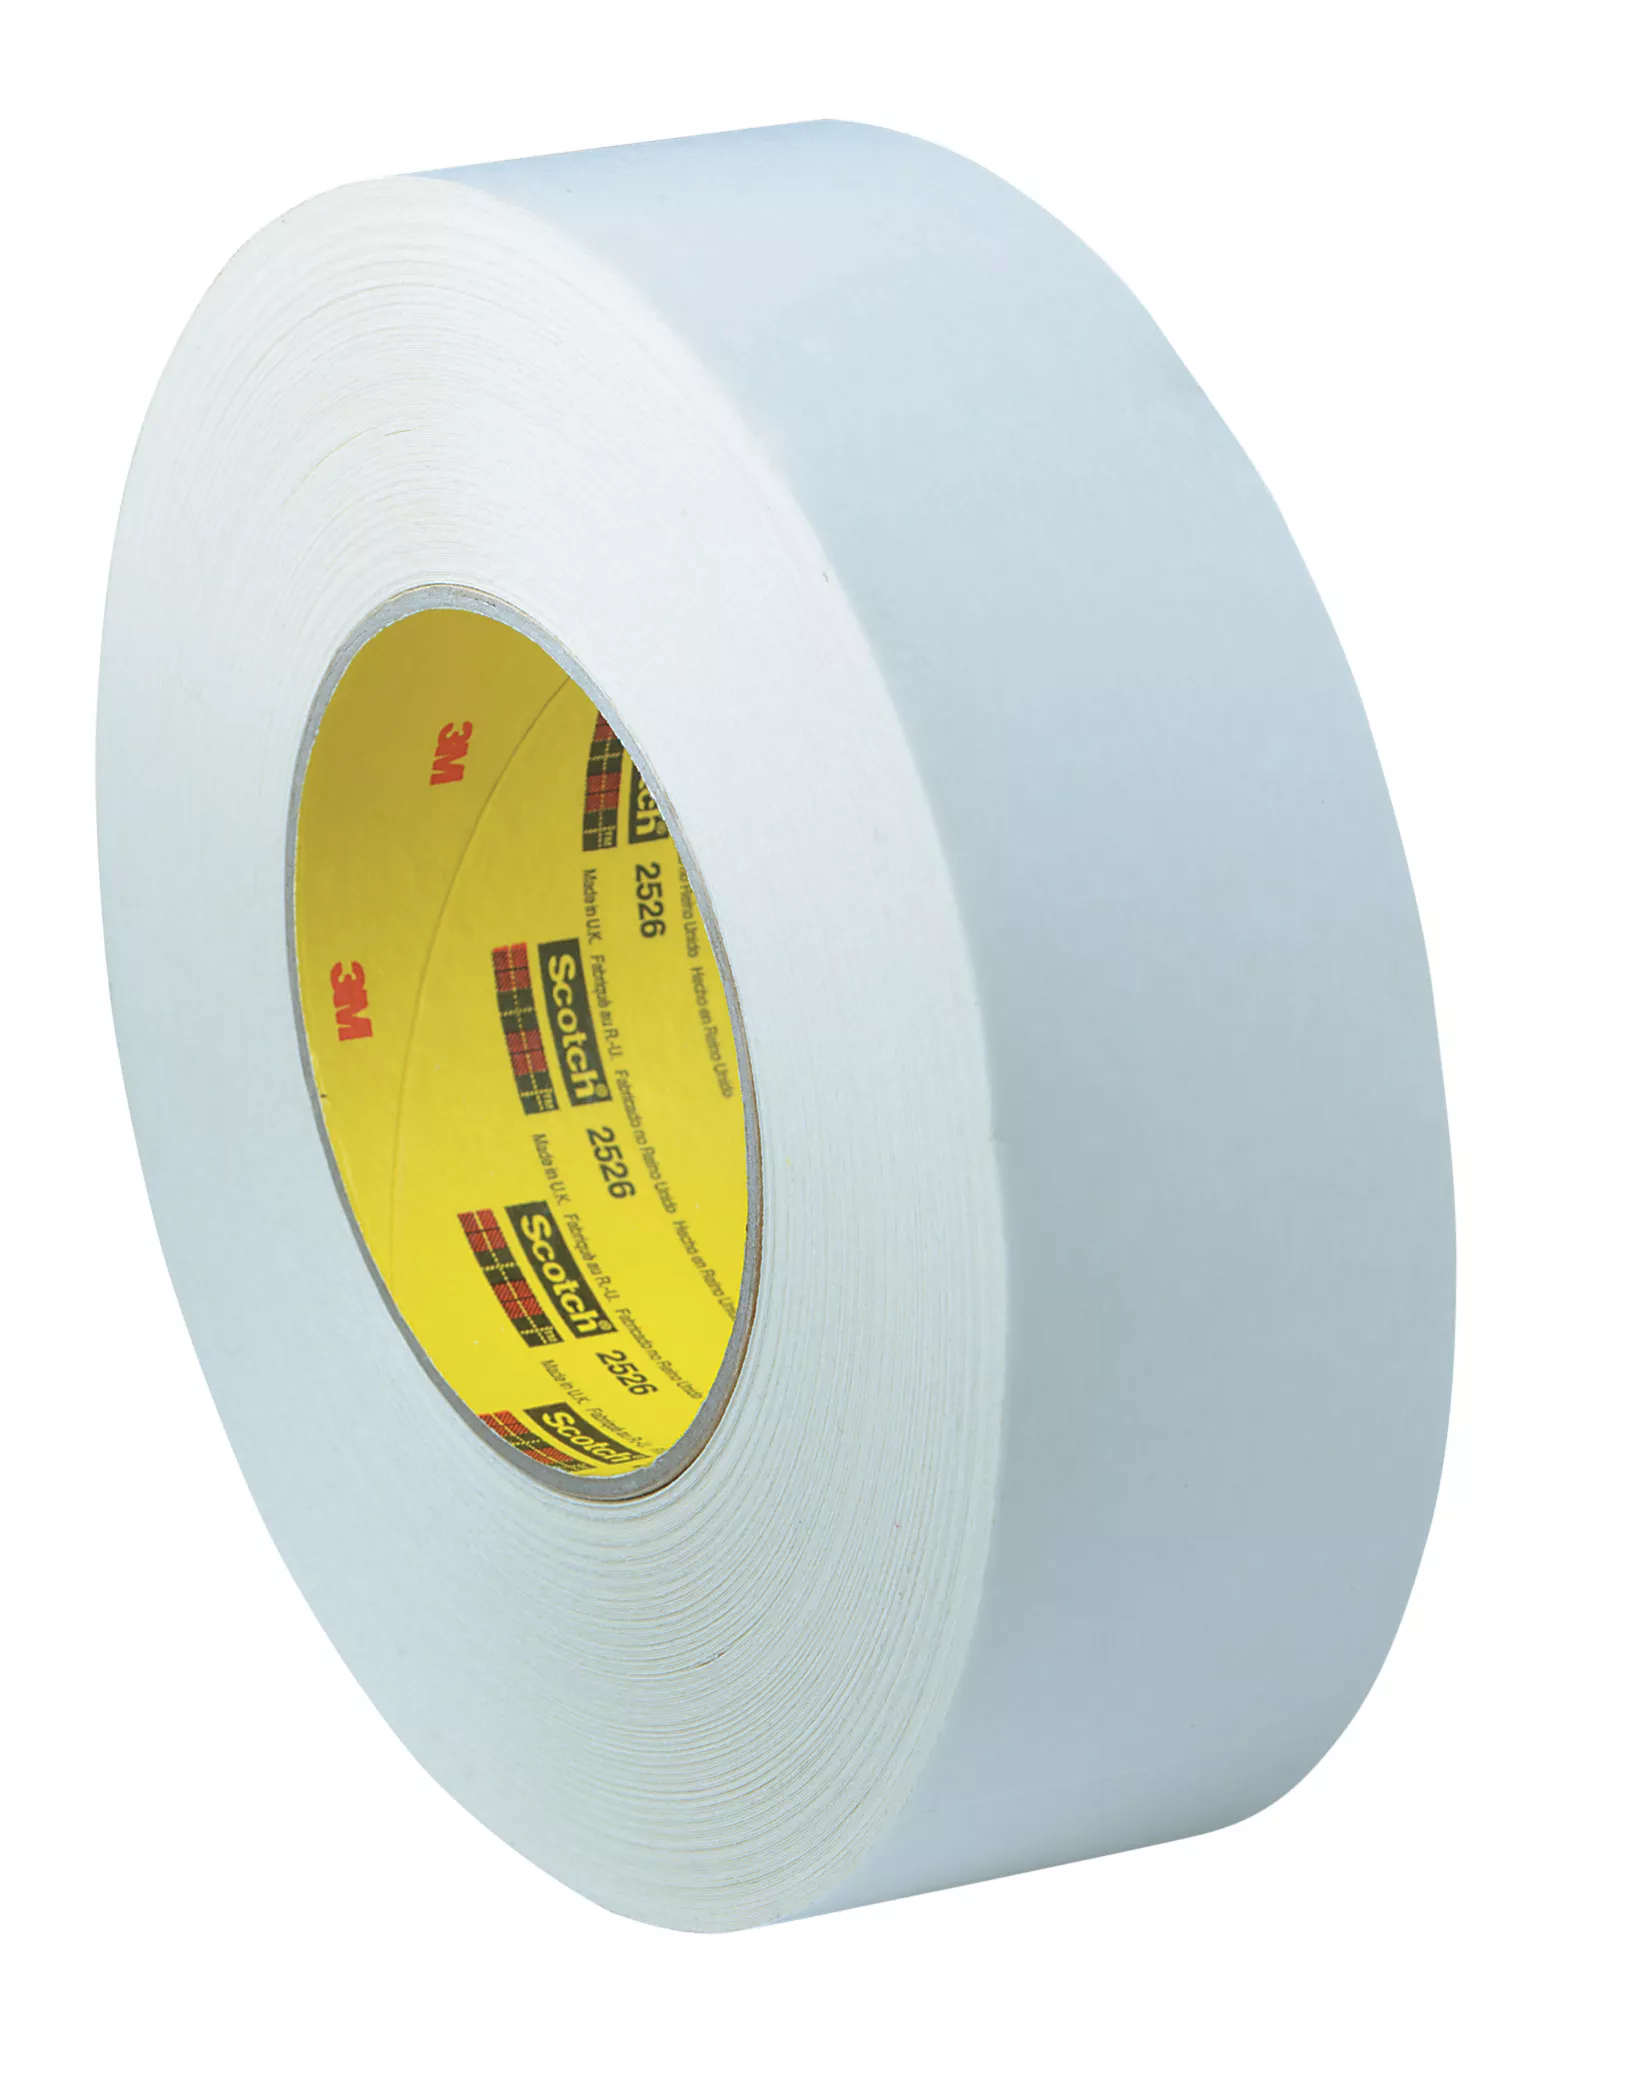 3M™ Textile Flatback Tape 2526, White, 96 mm x 55 m, 9.8 mil, 8
Rolls/Case